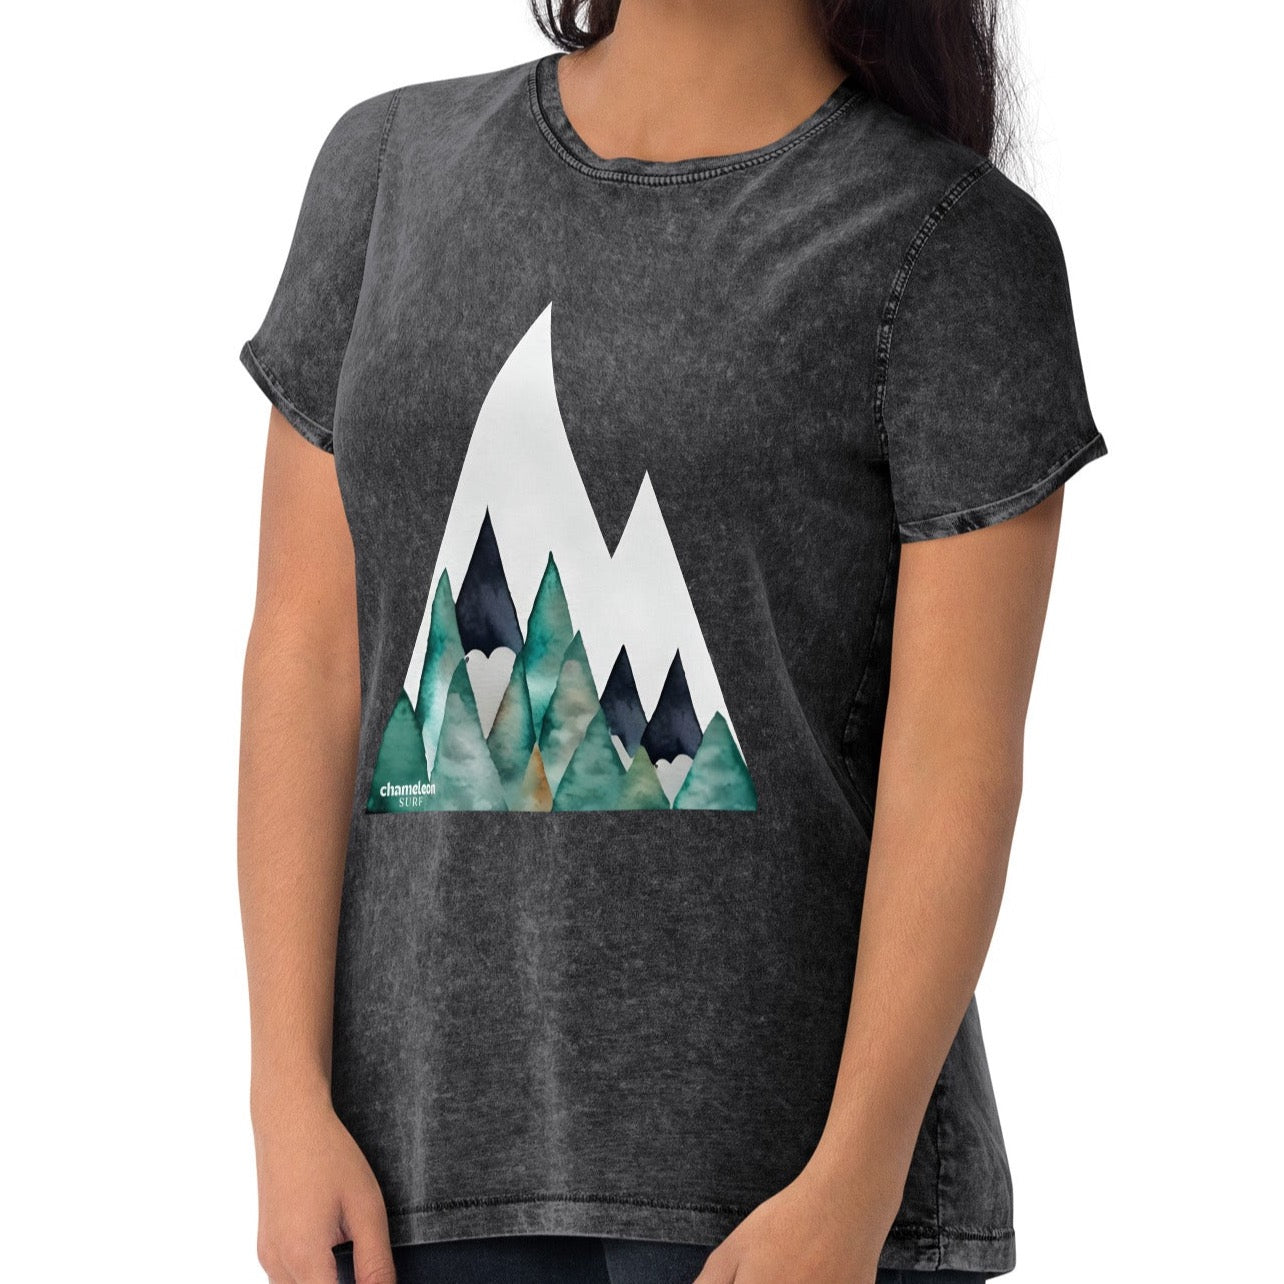 White Peak Green Mountains Acid Wash Denim Women's T-Shirt